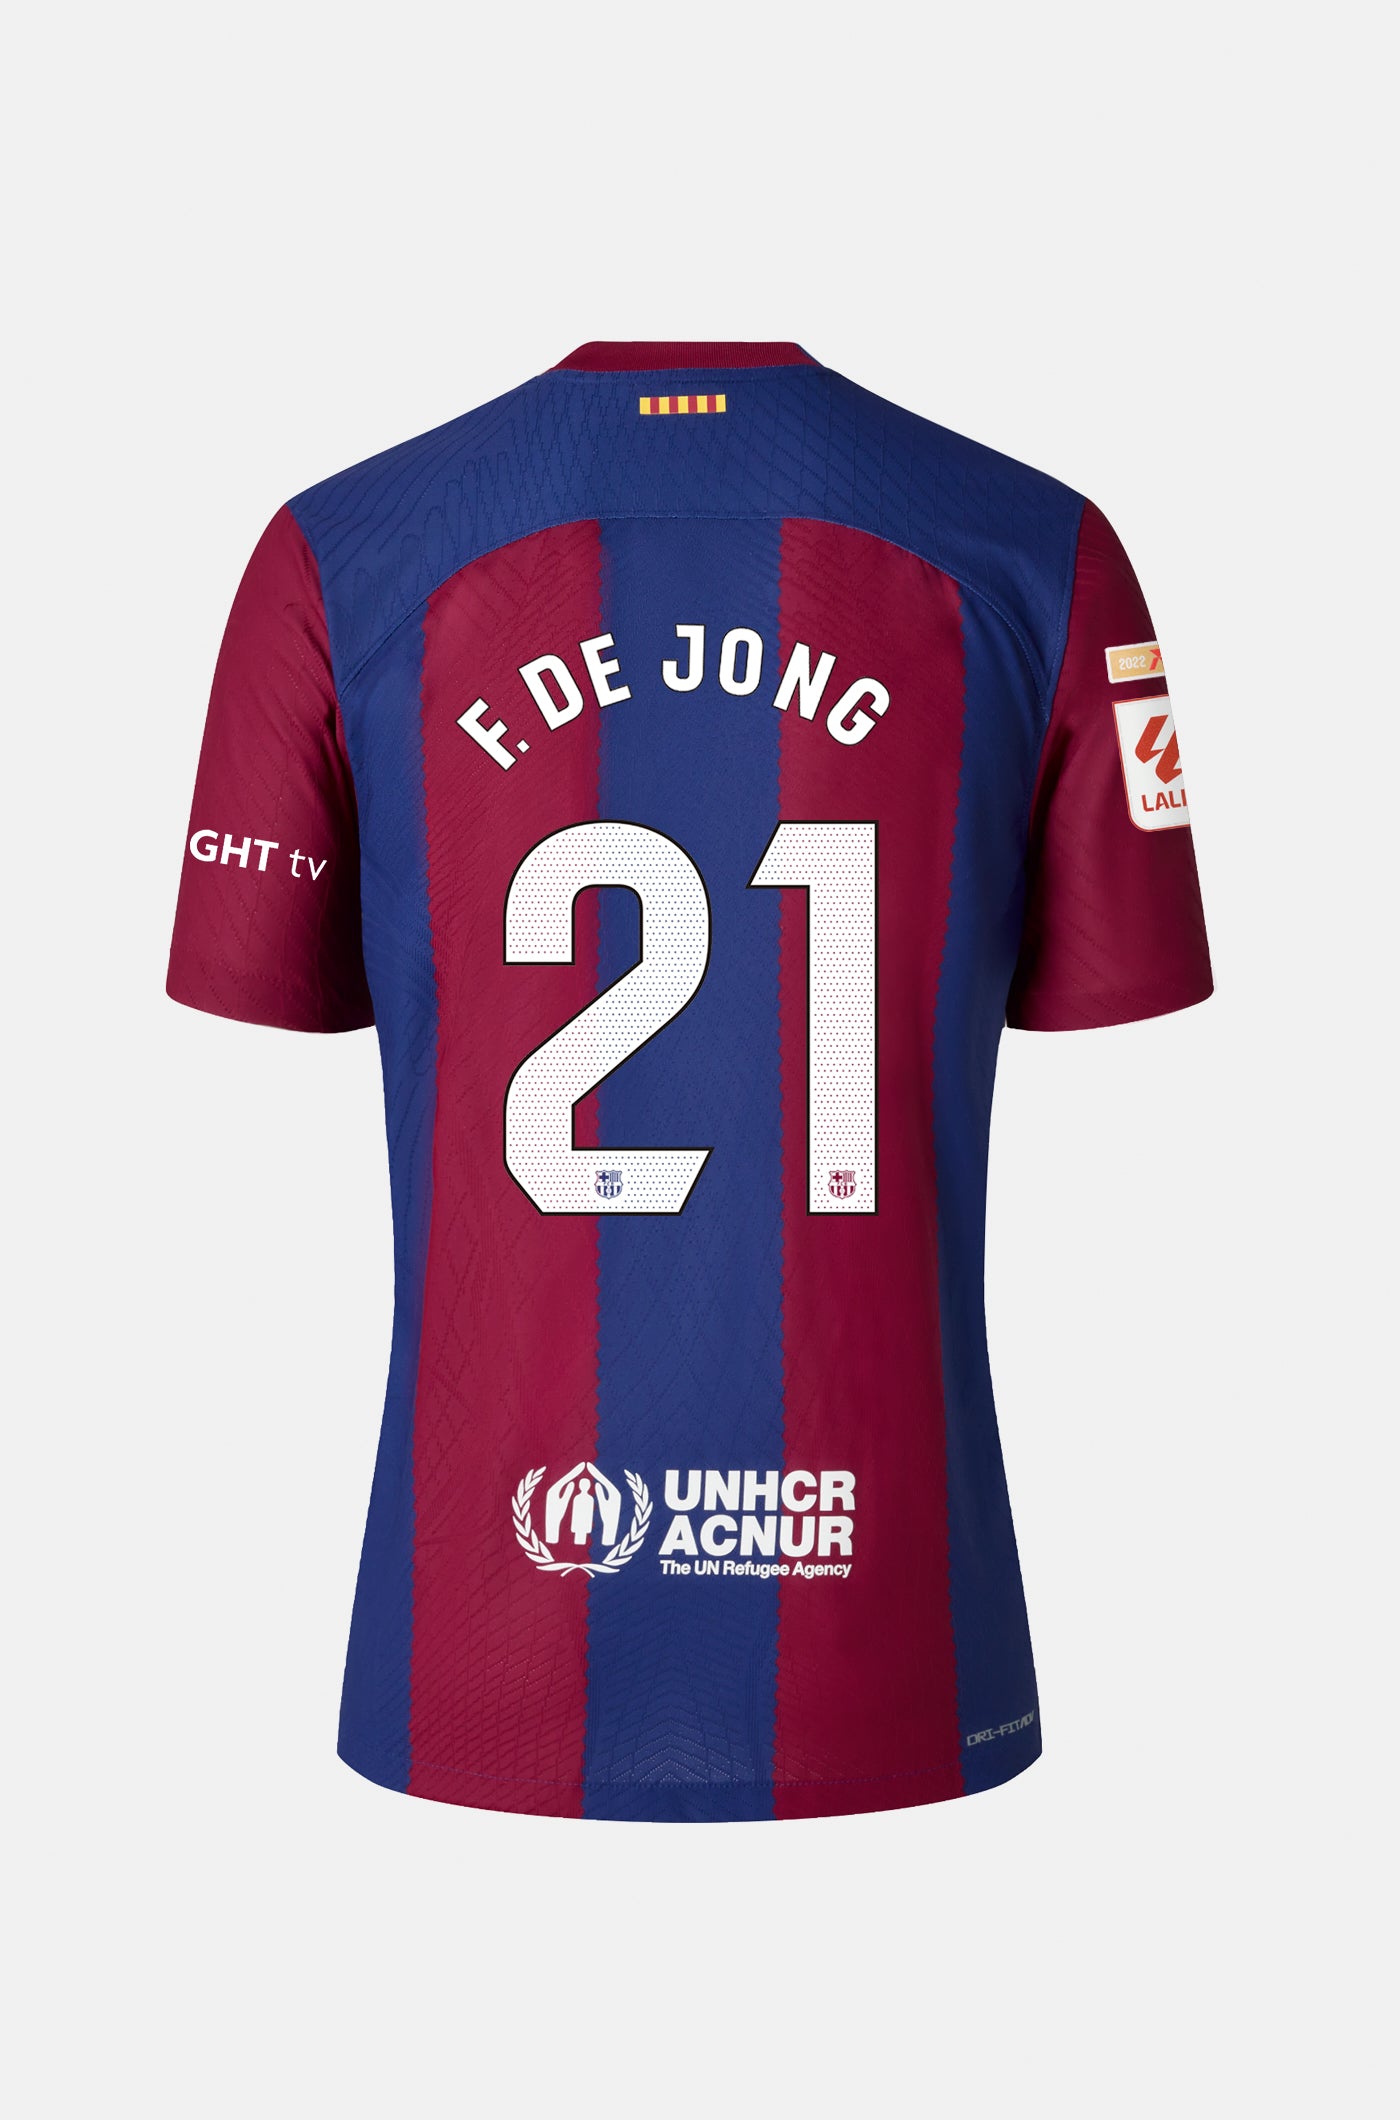 LFP FC Barcelona home shirt 23/24 Player's Edition - F. DE JONG